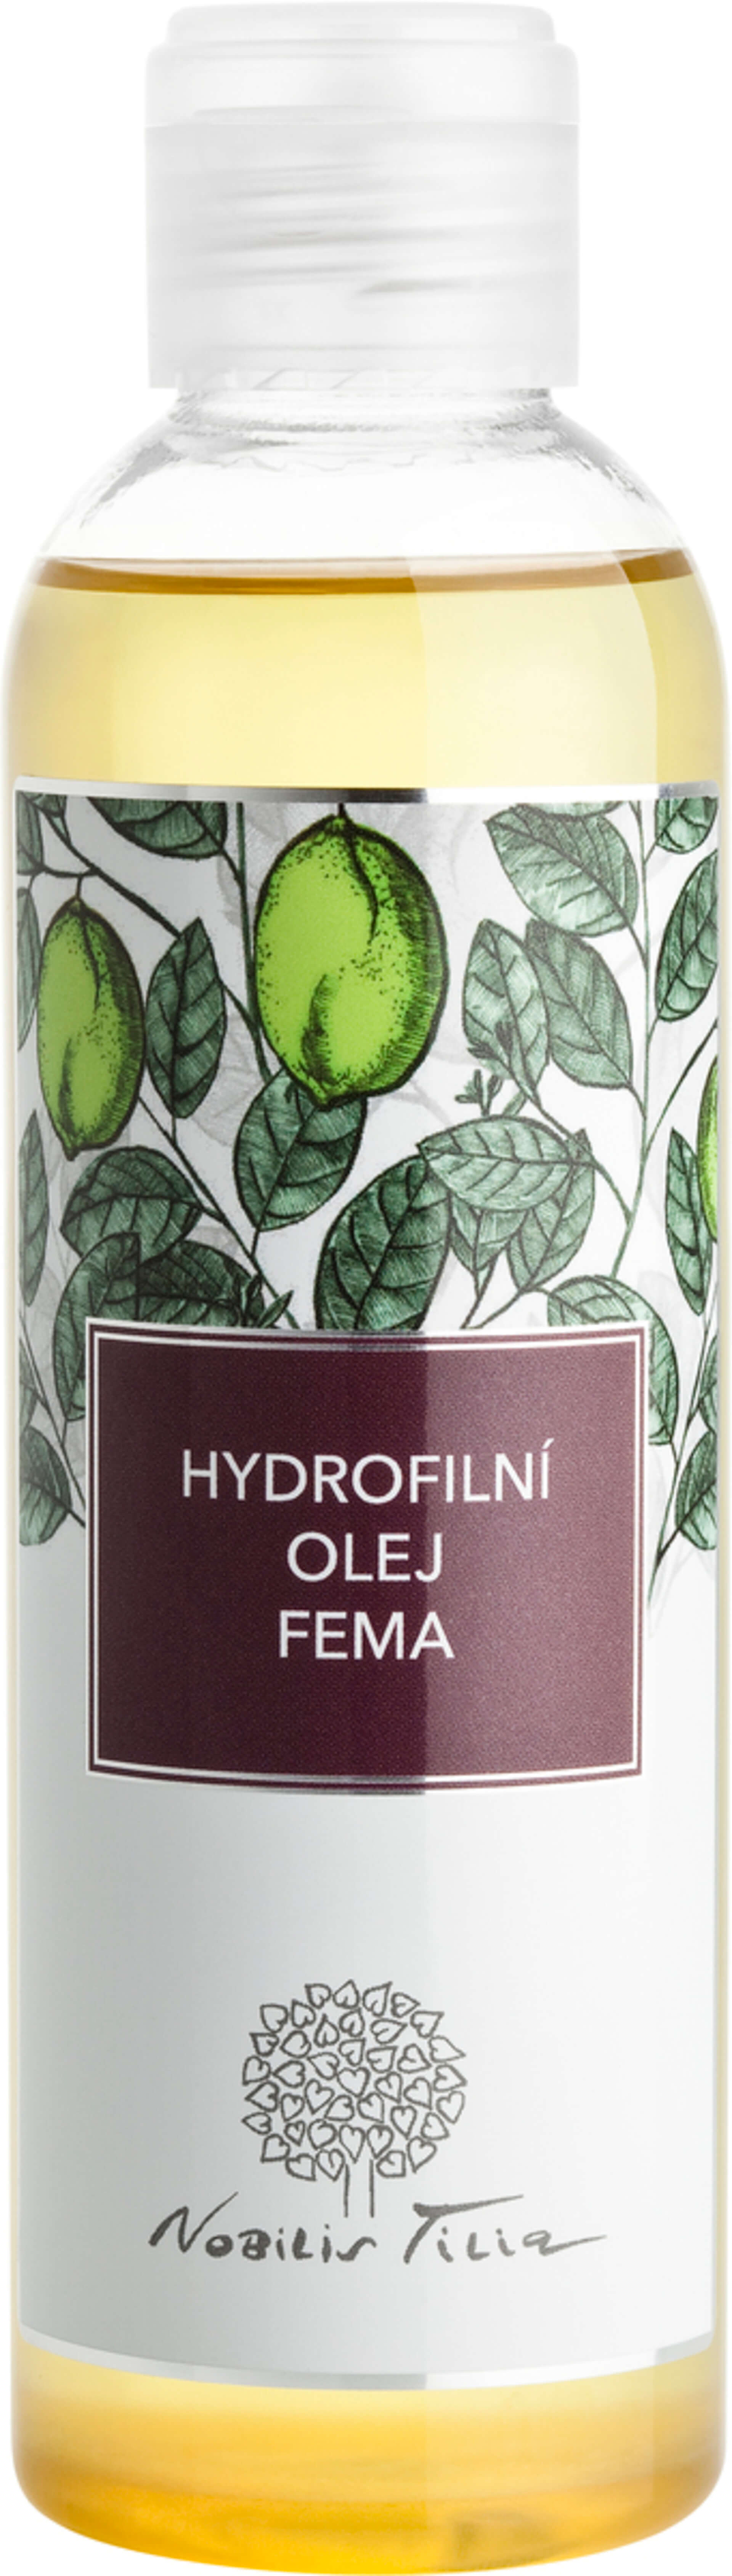 Levně Nobilis Tilia Hydrofilní olej Fema 200 ml